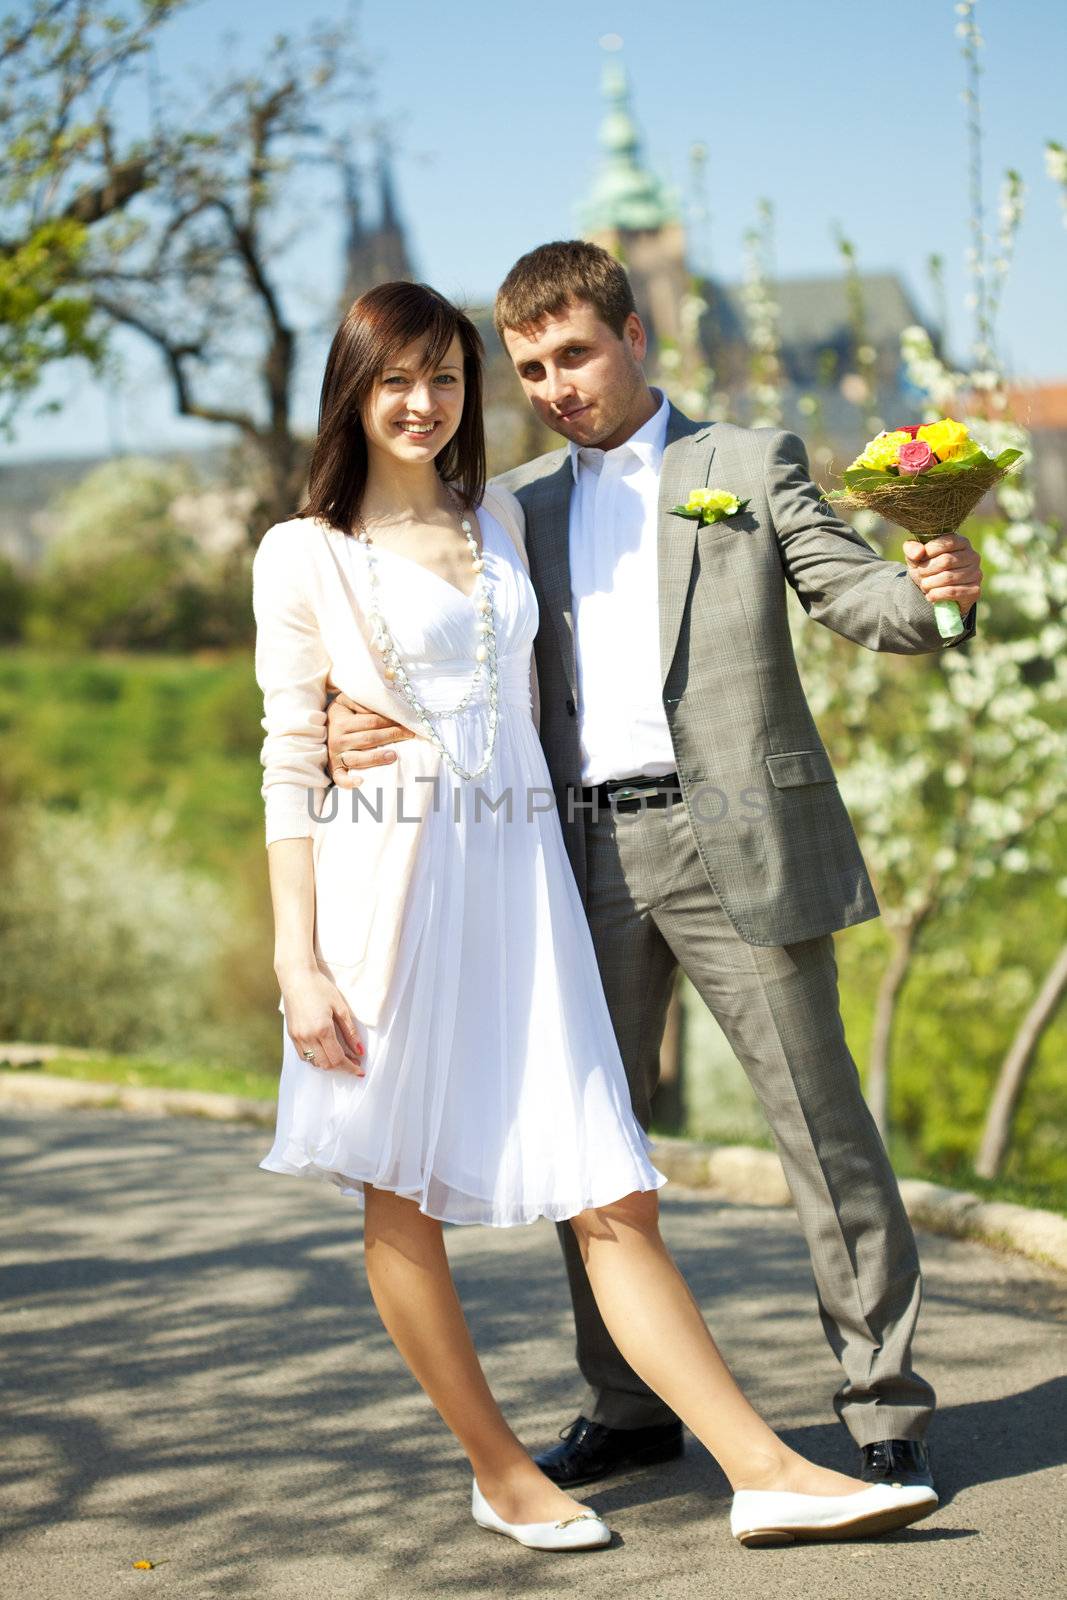  just married in a flowering garden